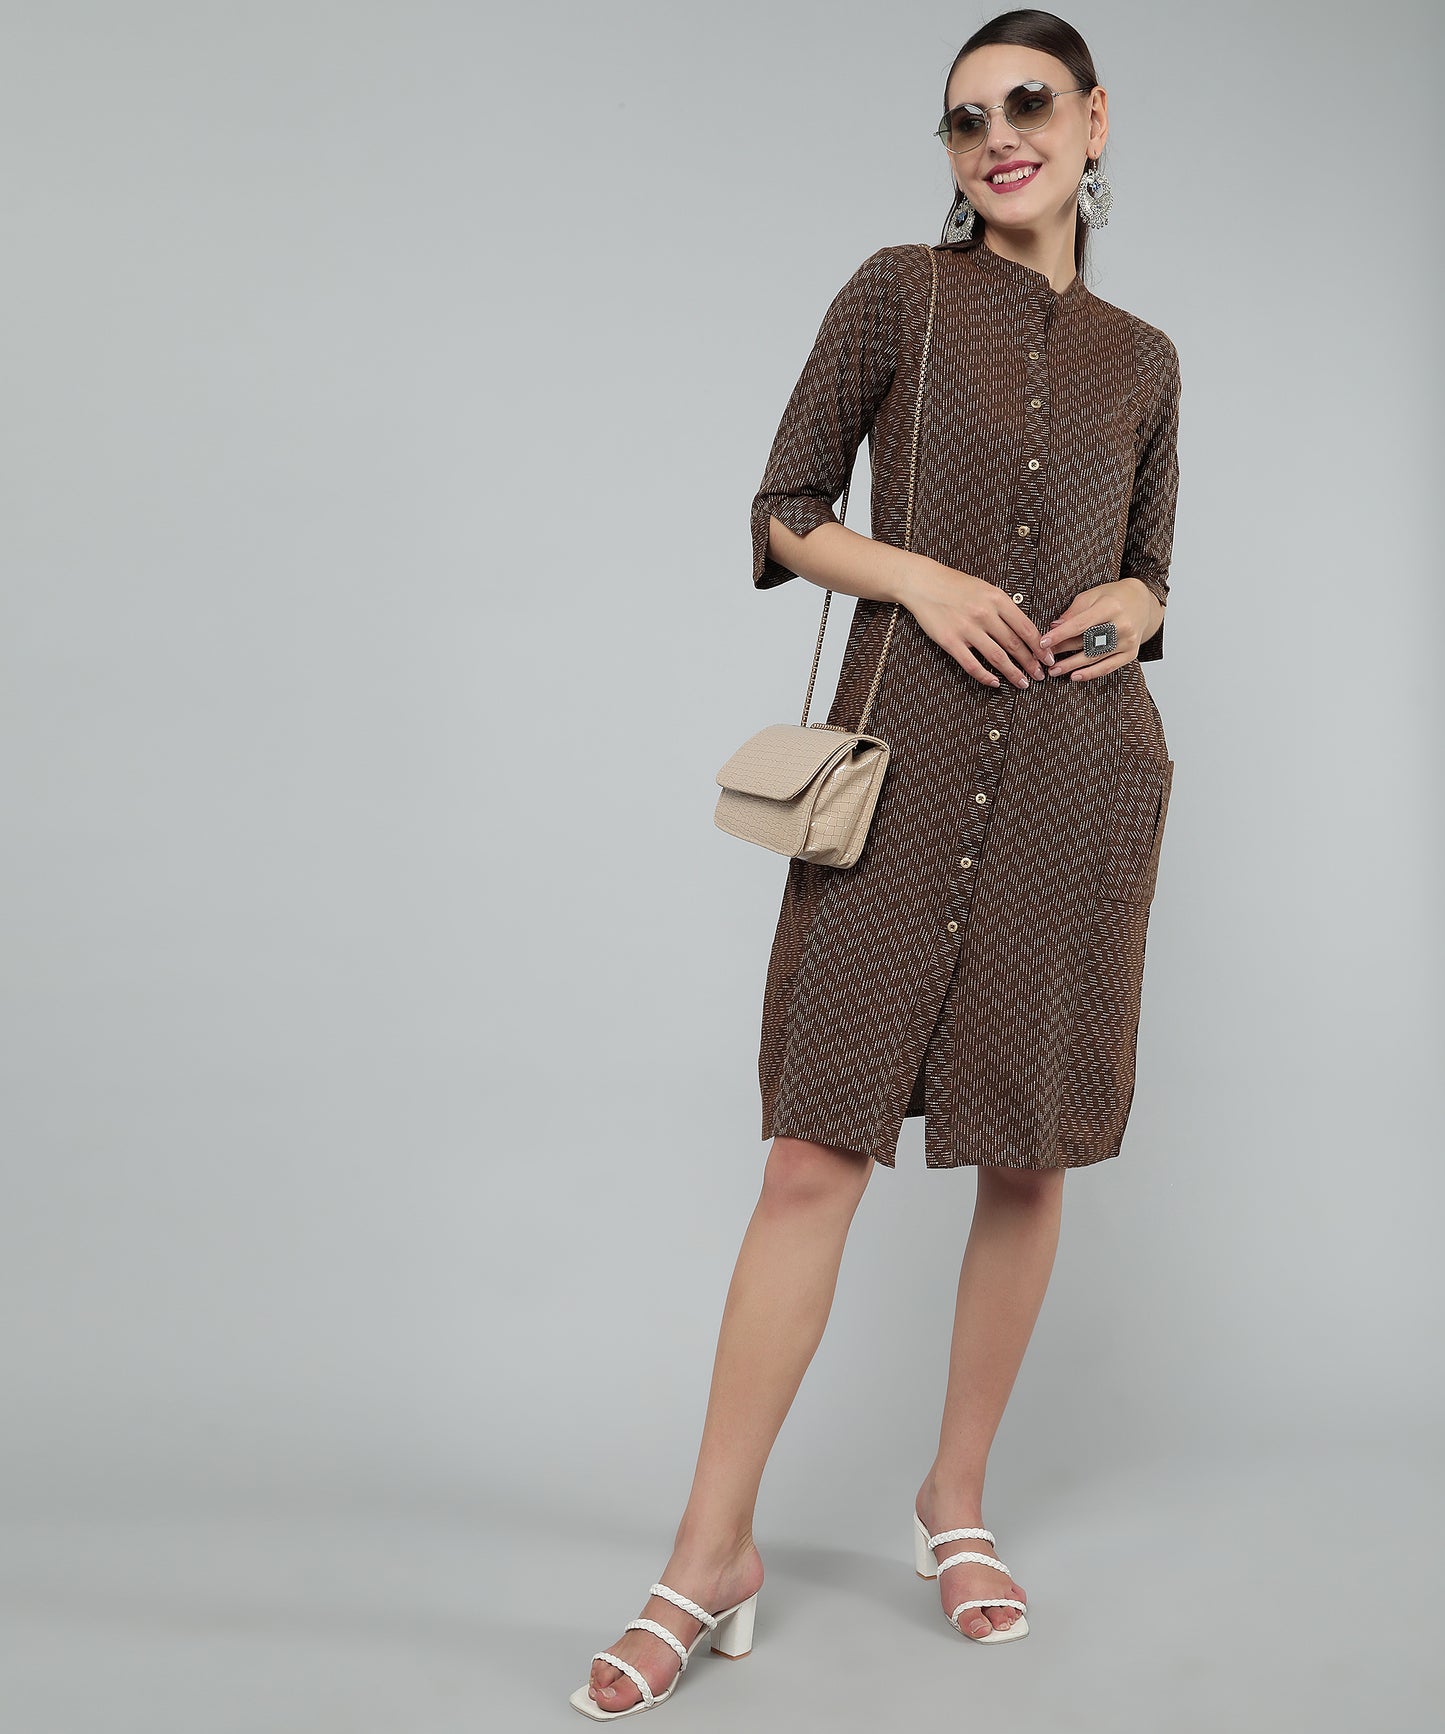 Self Weaved A-line Dress for Women Open Button Design, Brown